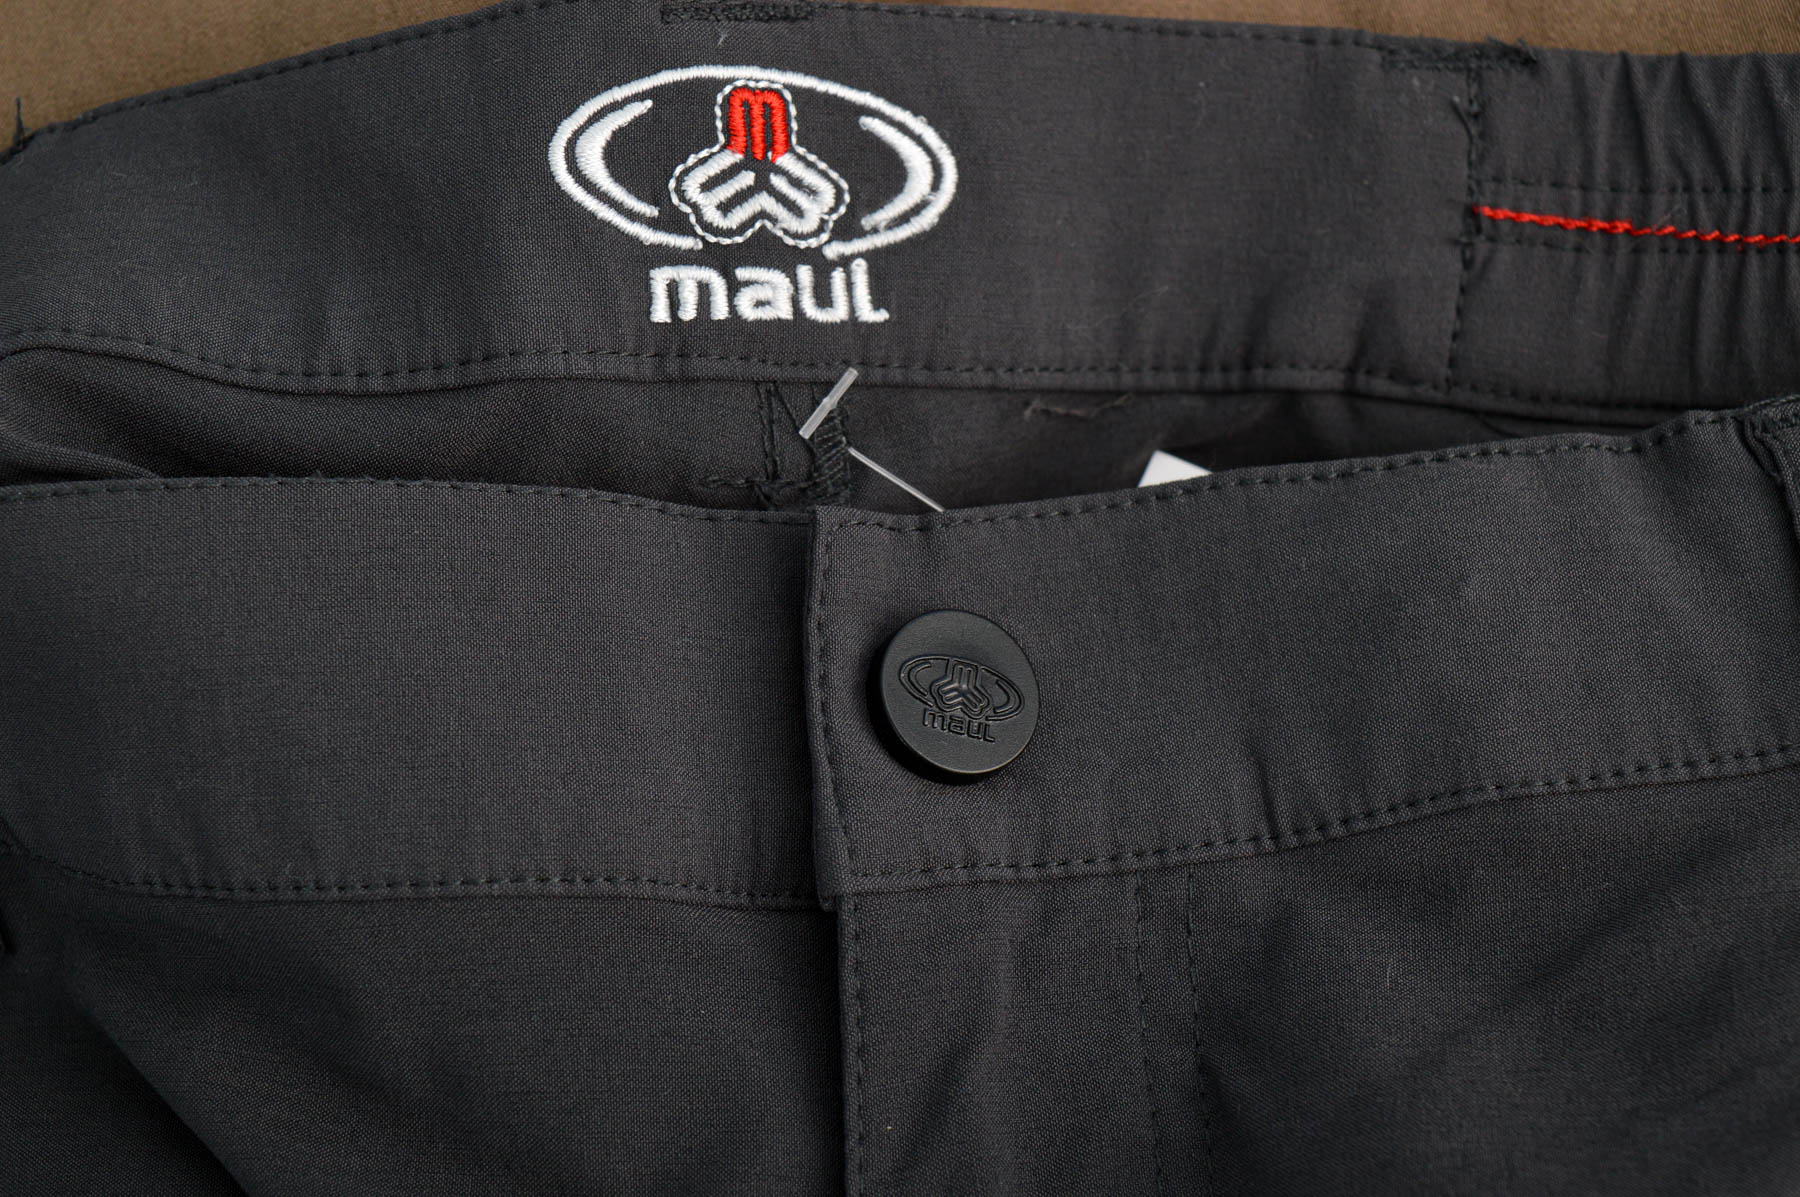 Men's trousers - Maul - 2